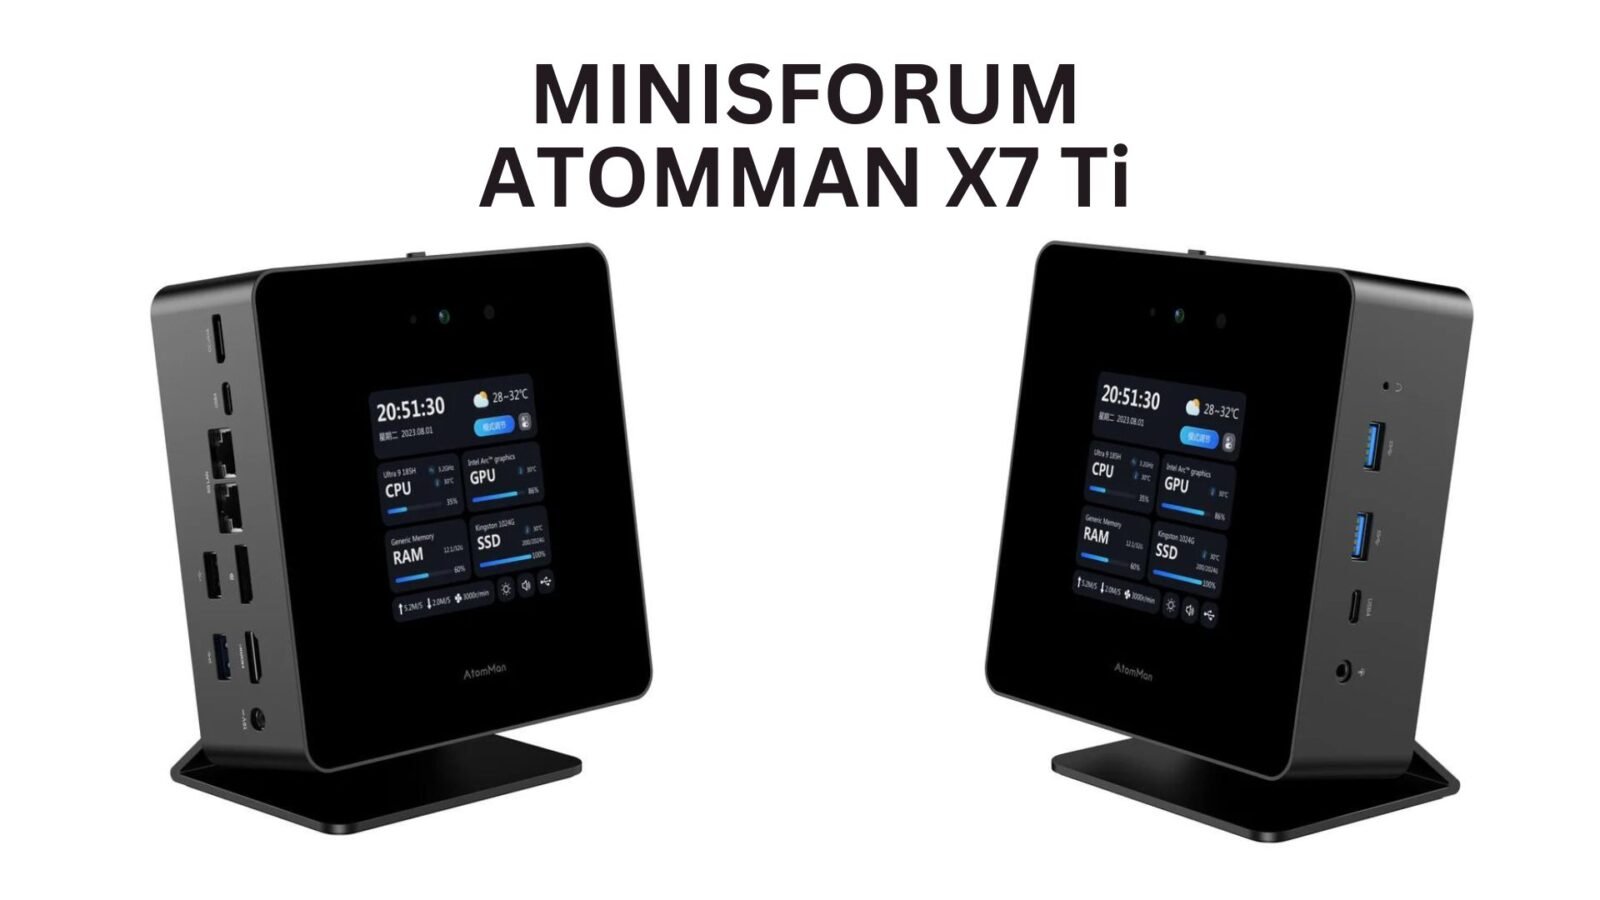 Minisforum AtomMan X7 Ti pre-order